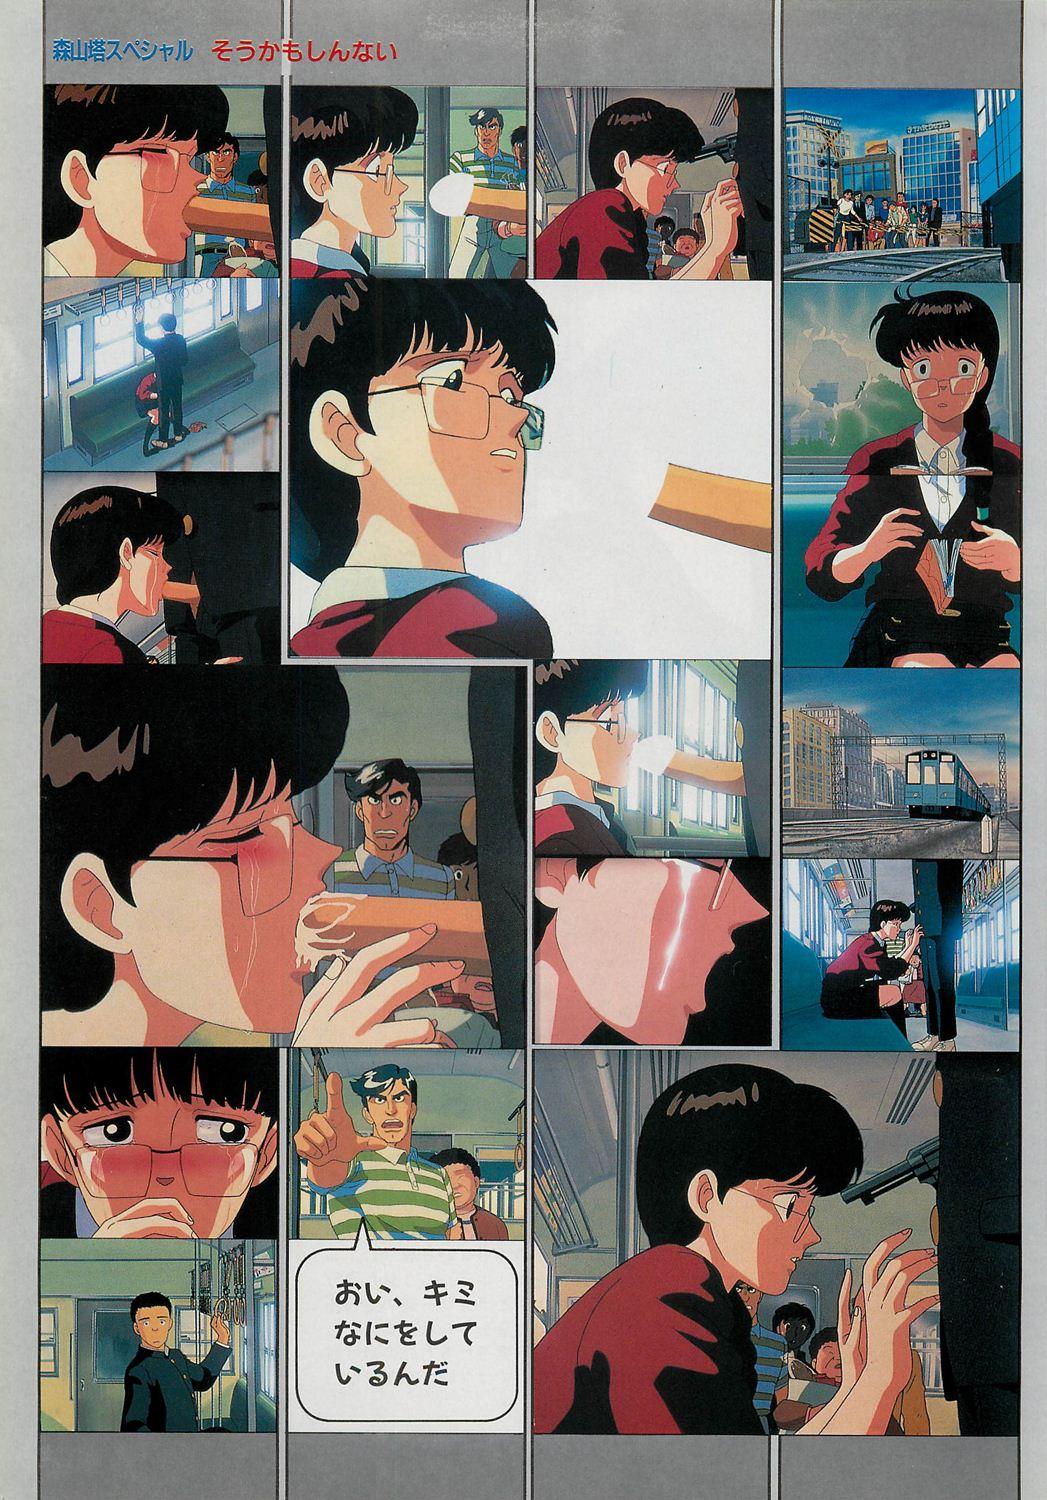 Brasil Cream Lemon Film Comics - To Moriyama Special "Soukamoshinnai - Cream lemon Hotfuck - Page 3